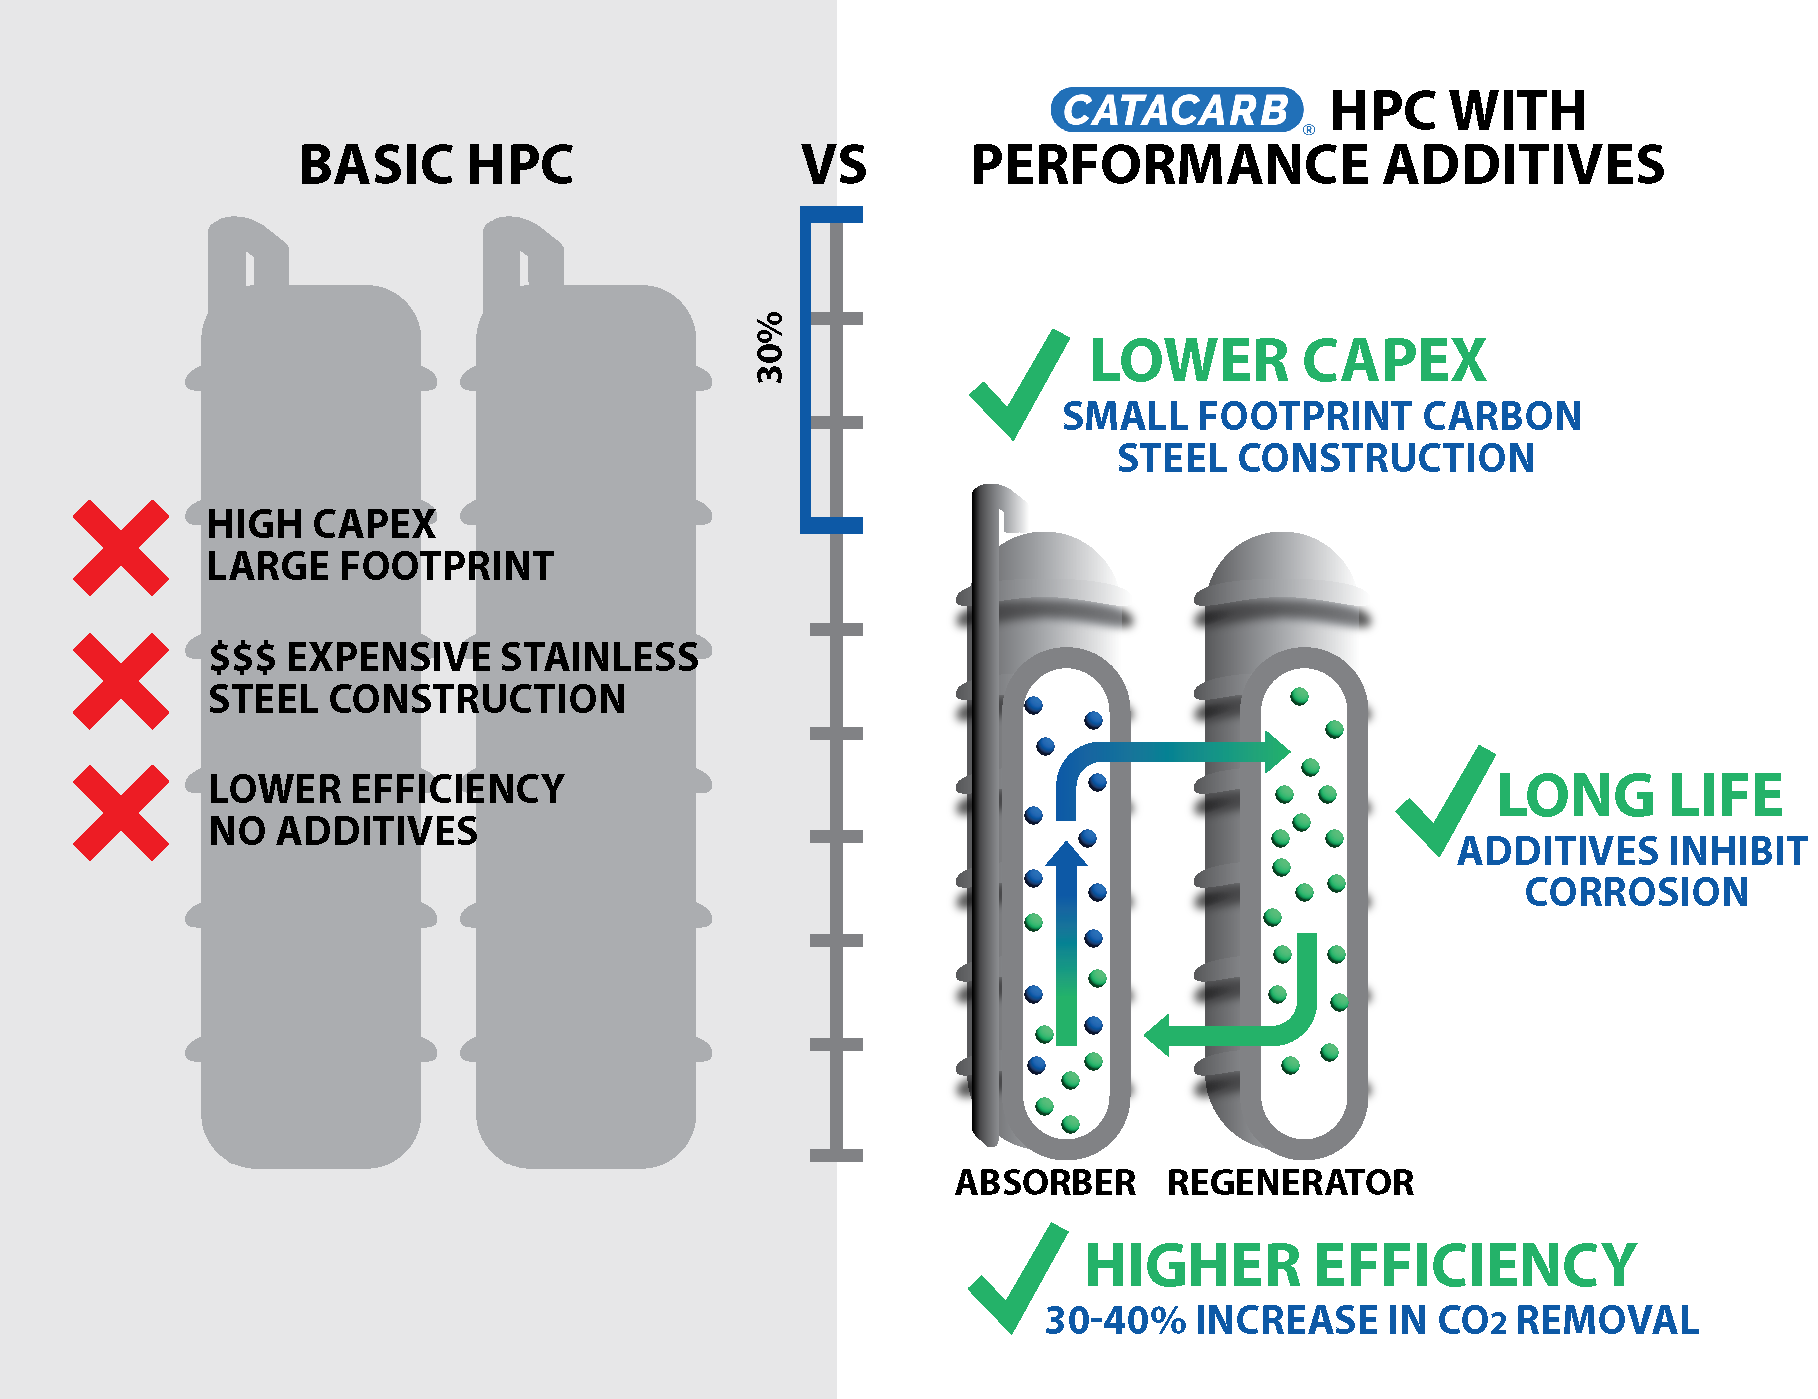 Basic HPC vs CATACARB CCSidebySide